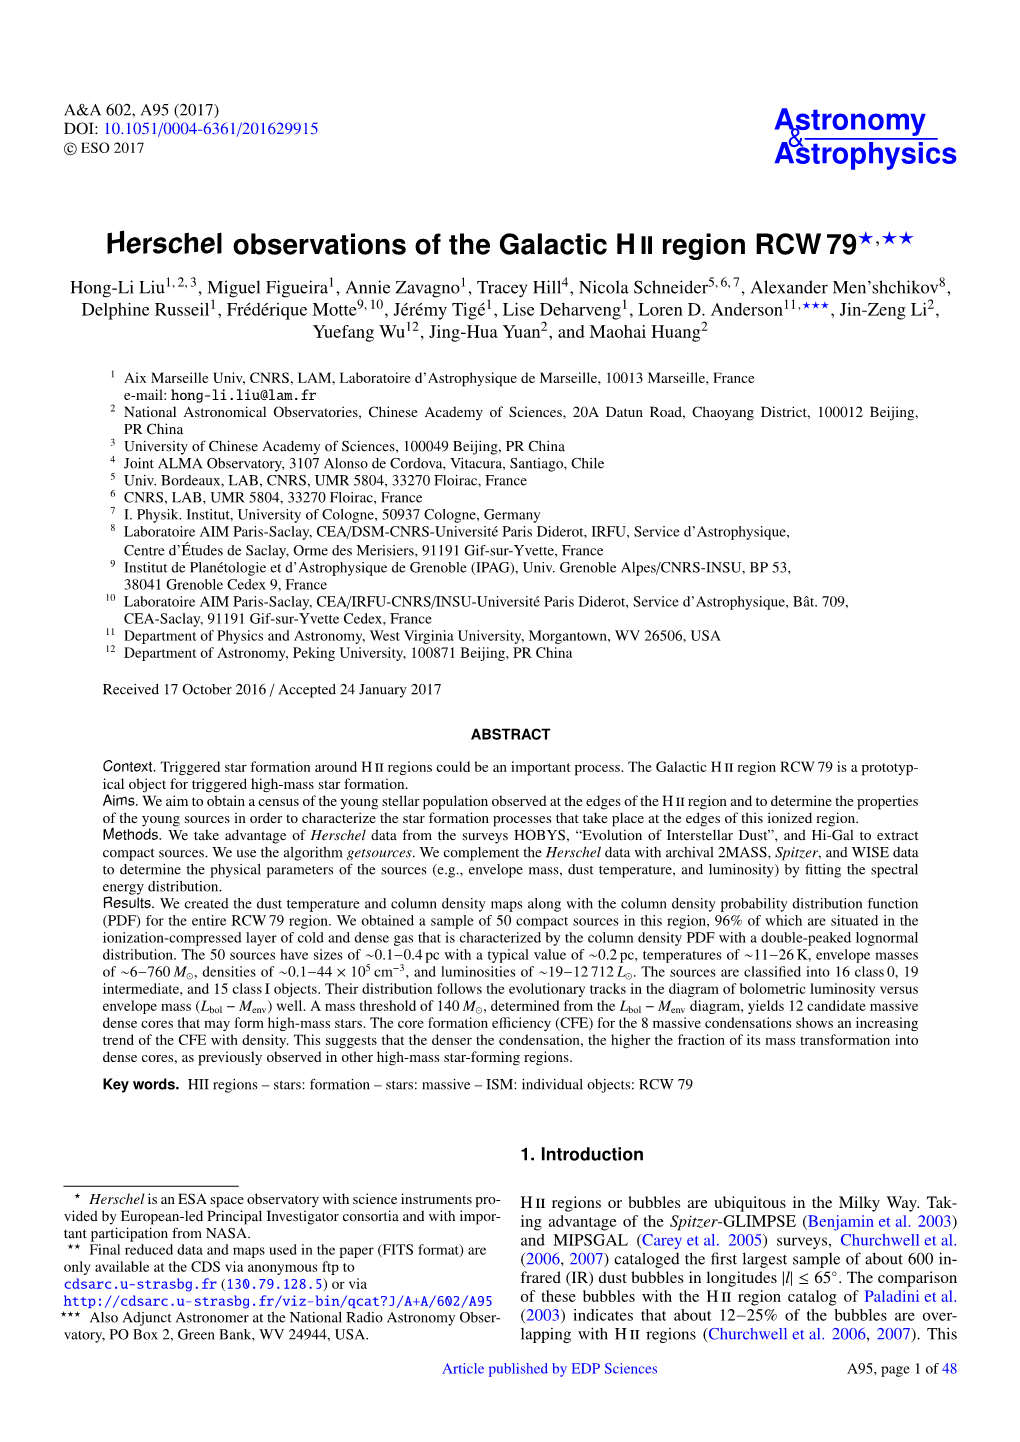 Herschel Observations of the Galactic H Ii Region RCW 79